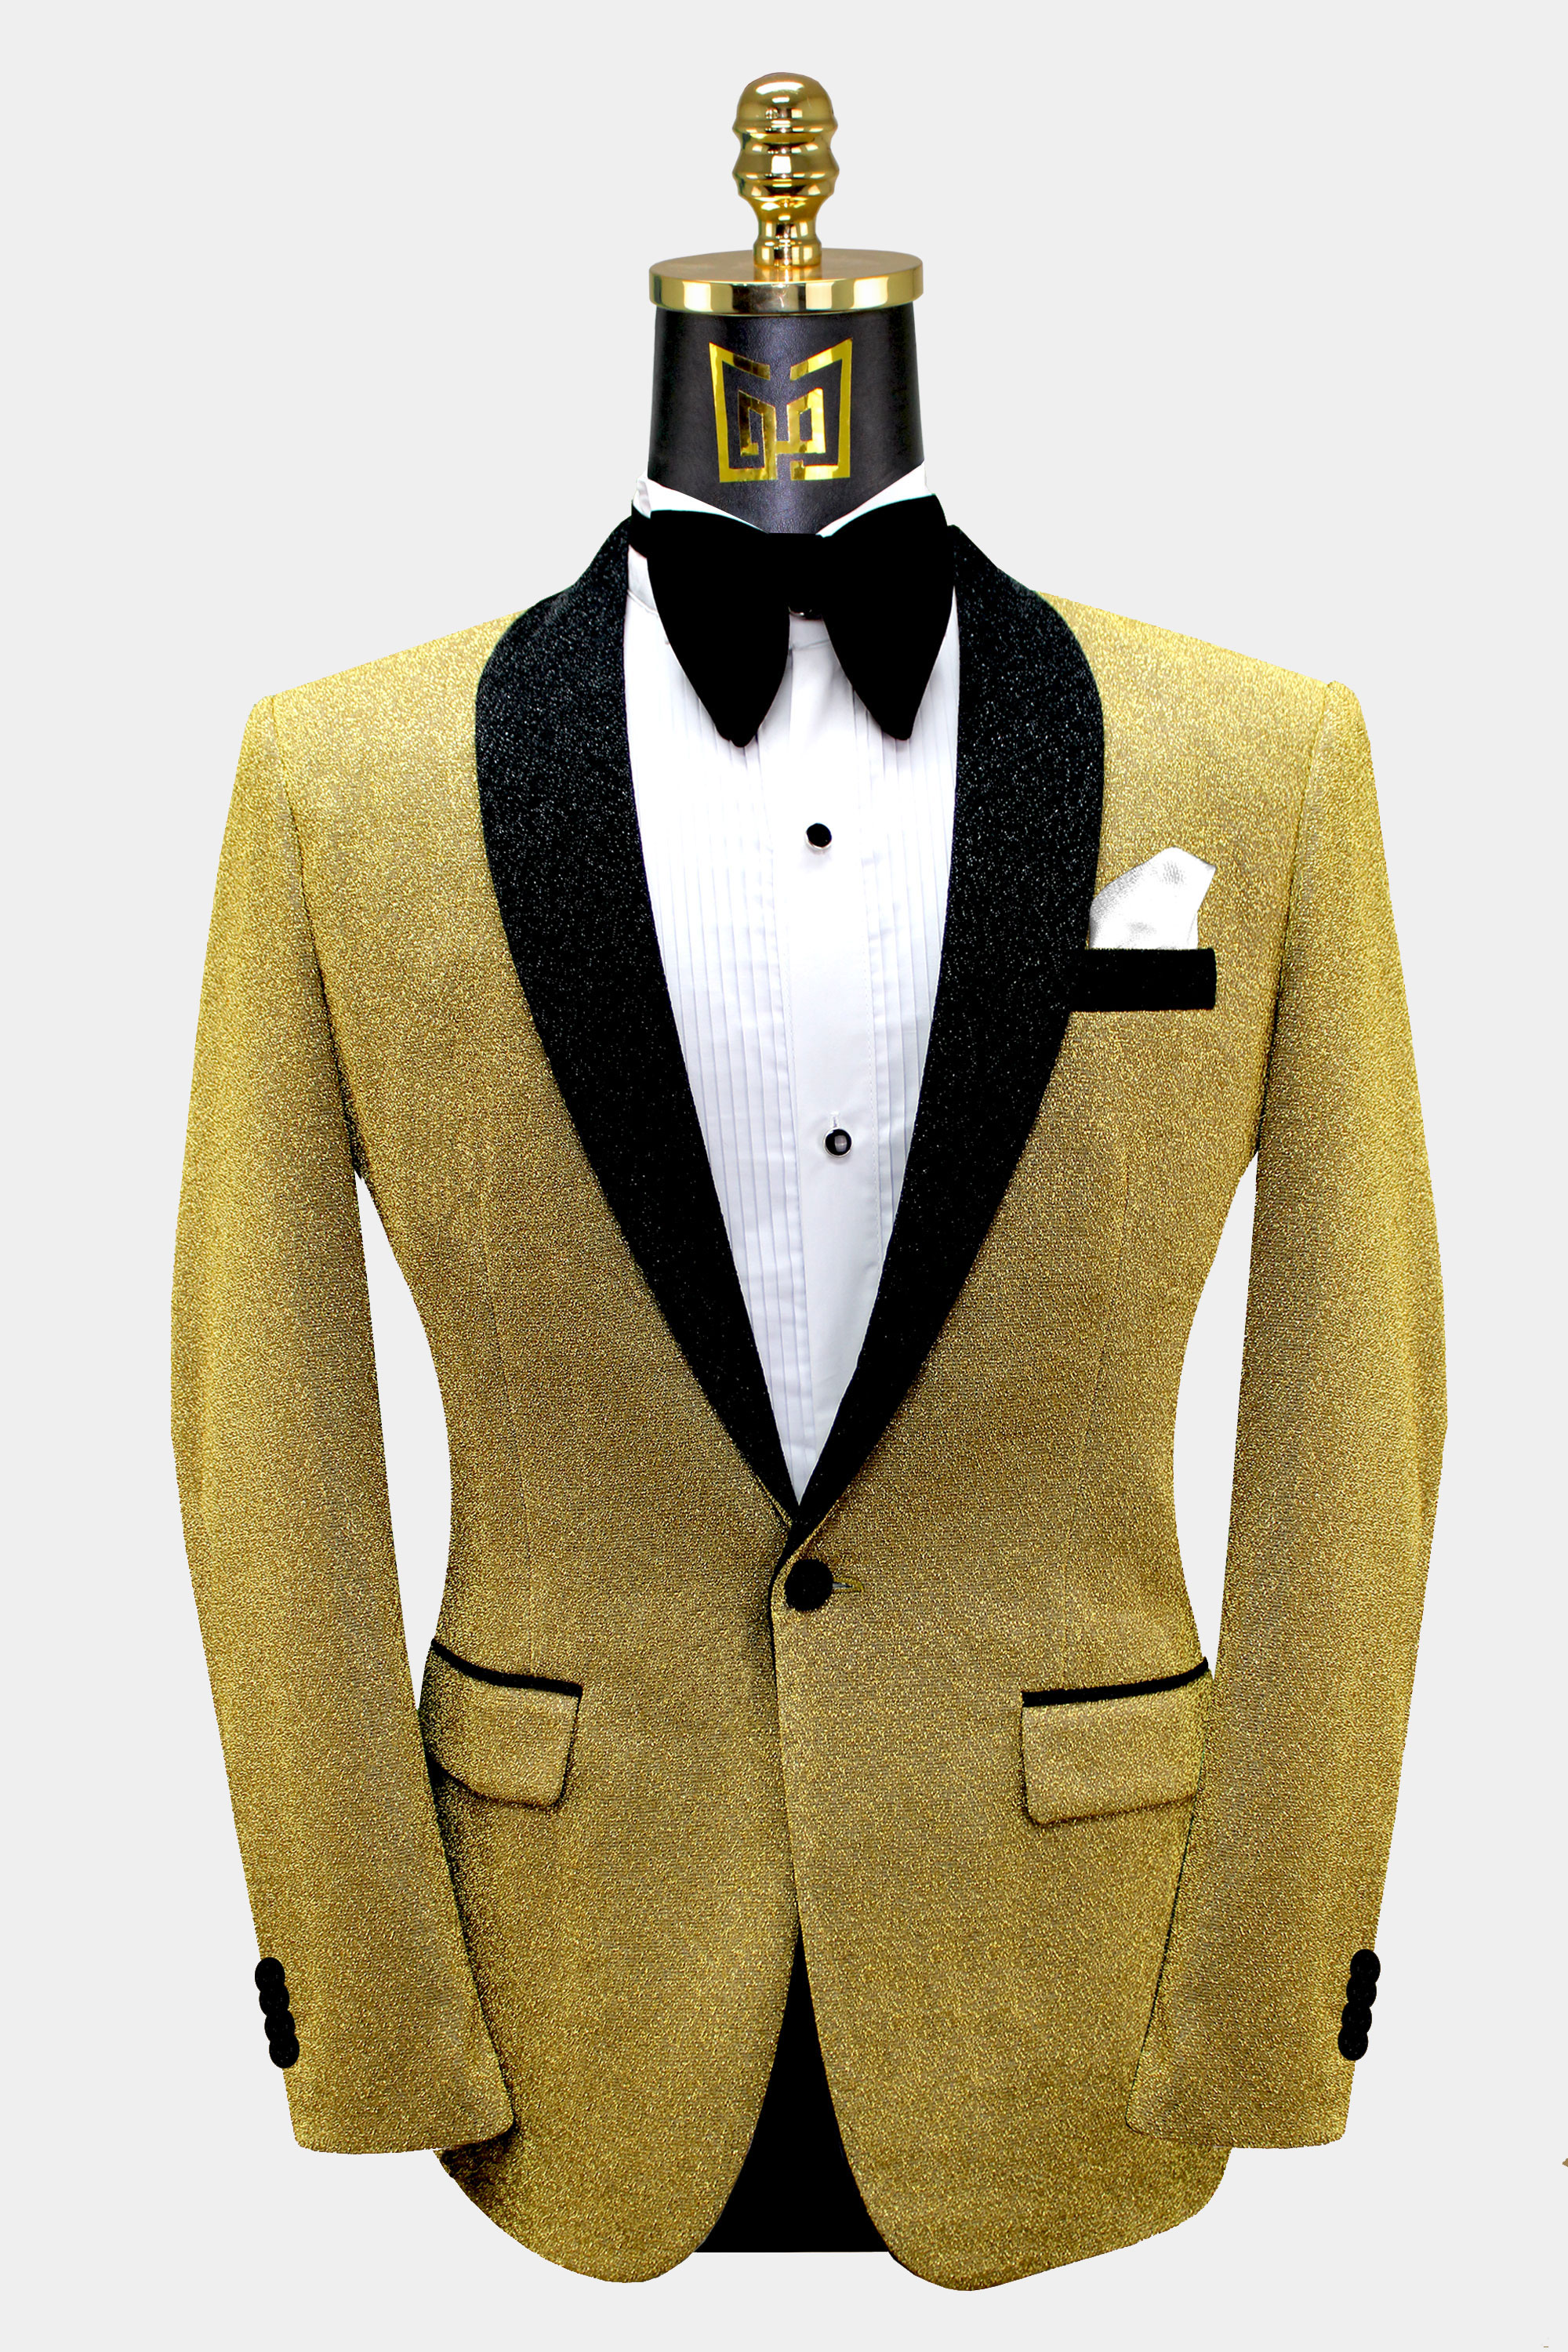 Mens-Black-and-Gold-Glitter-Tuxedo-Jacket-Prom-Blazer-Suit-from-Gentlemansguru.com